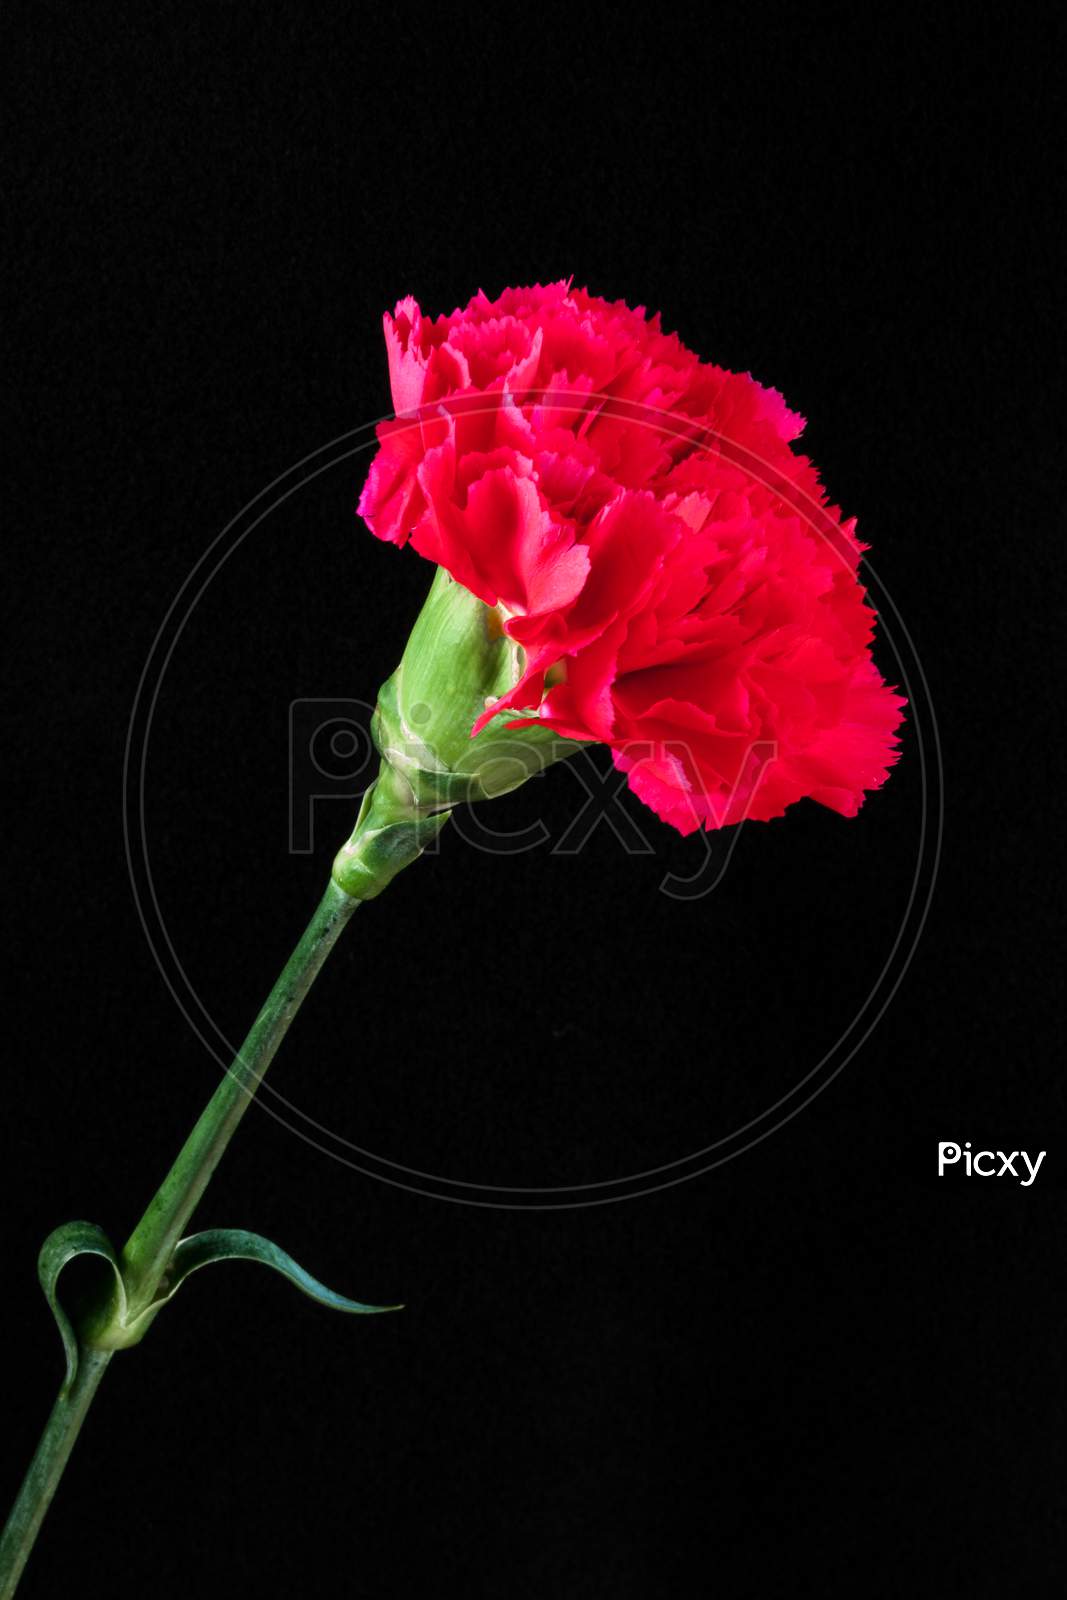 Single Red Carnation Against A Black Backgound